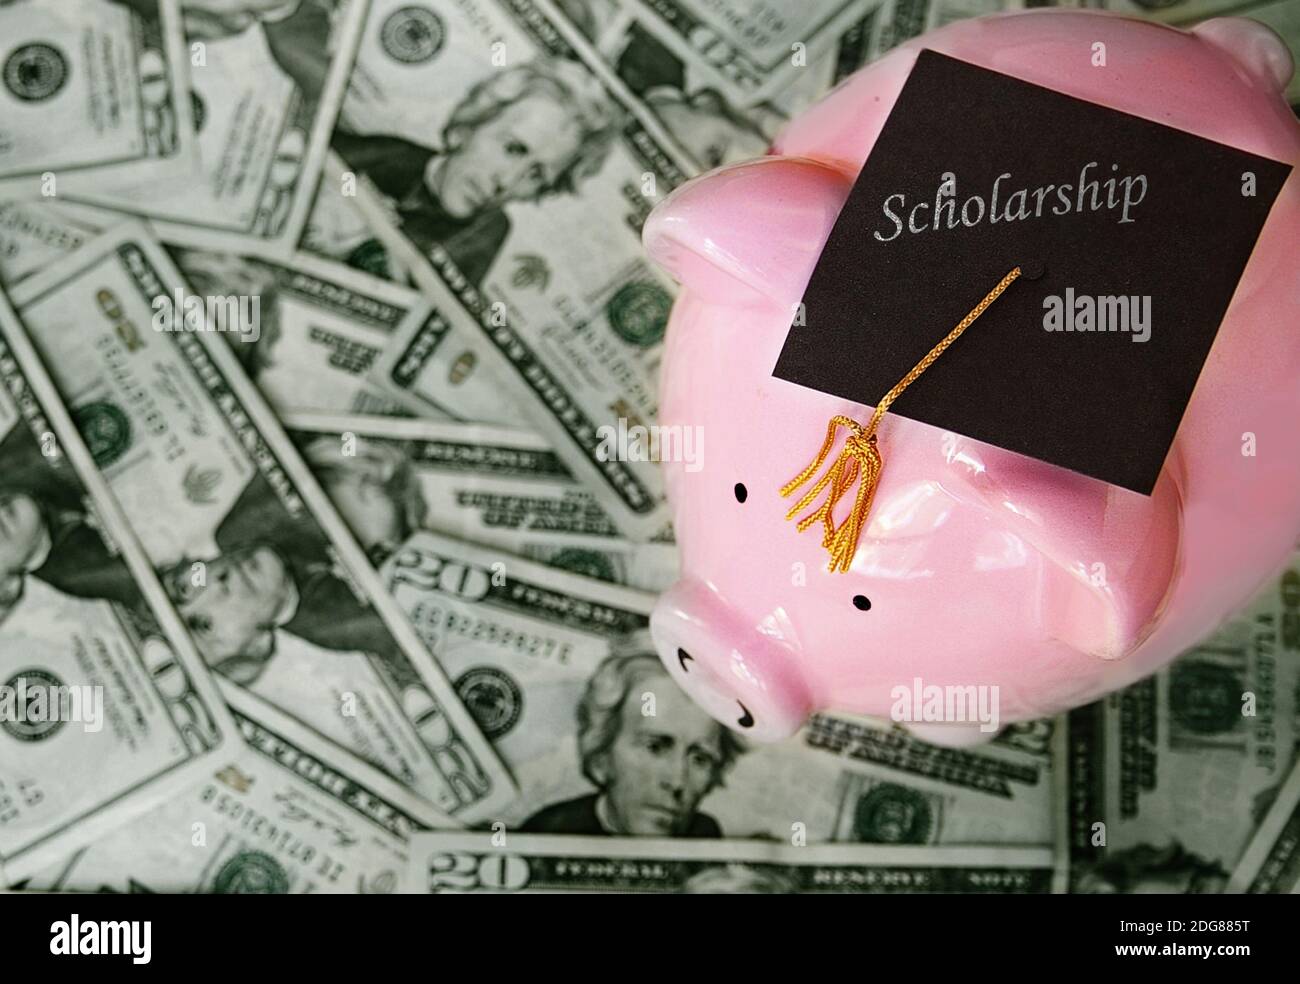 Scholarship education concept Stock Photo